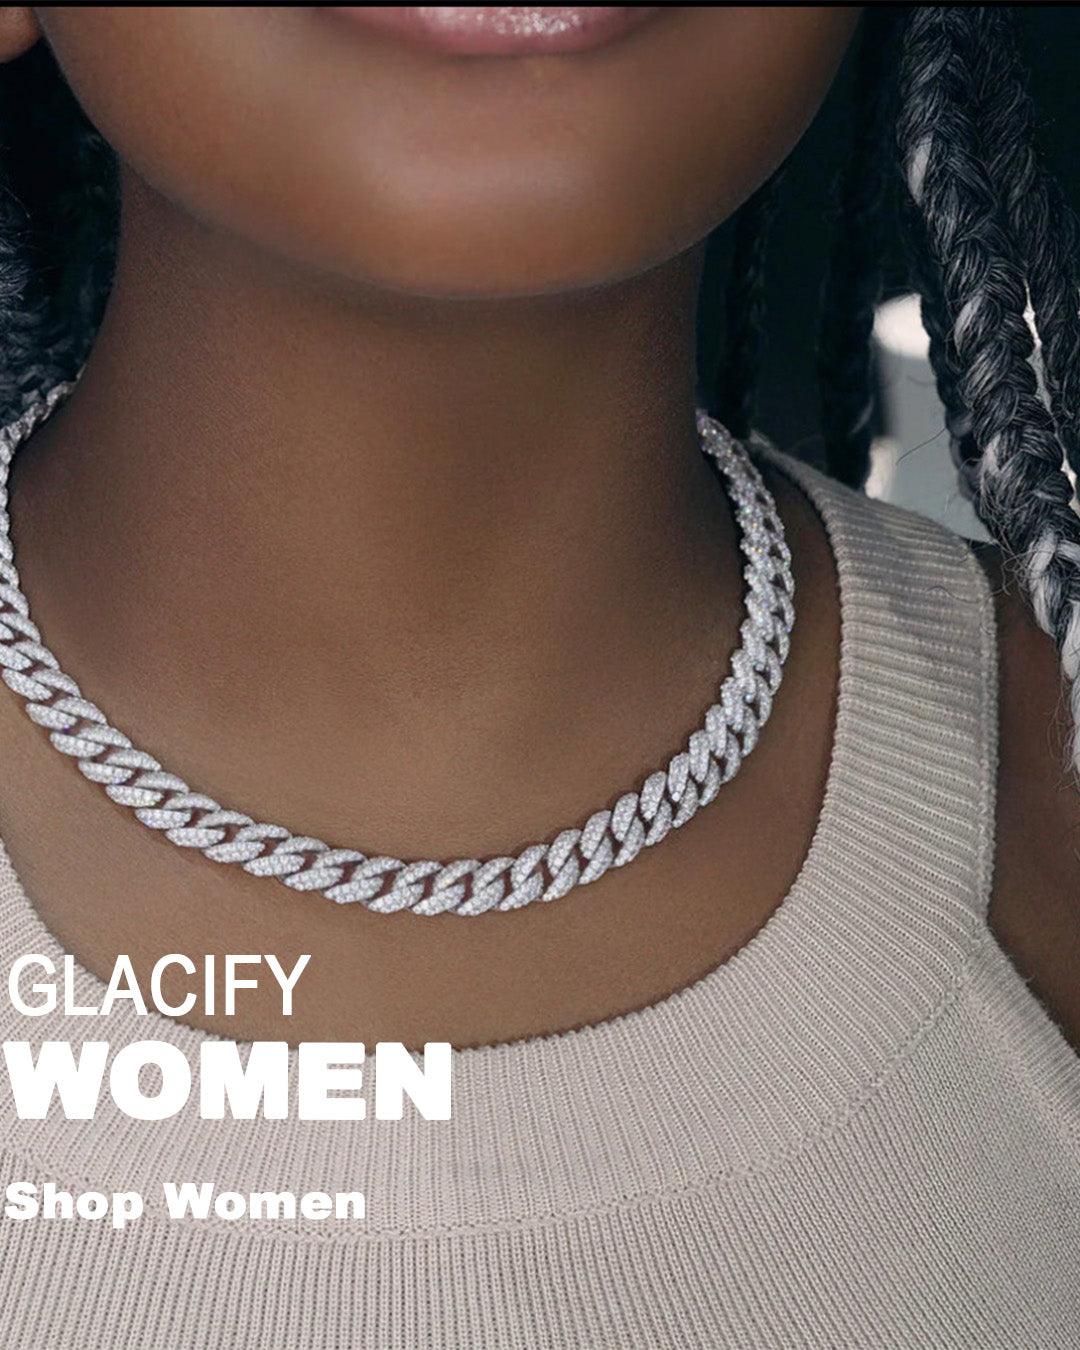 Women's Necklaces - GLACIFY